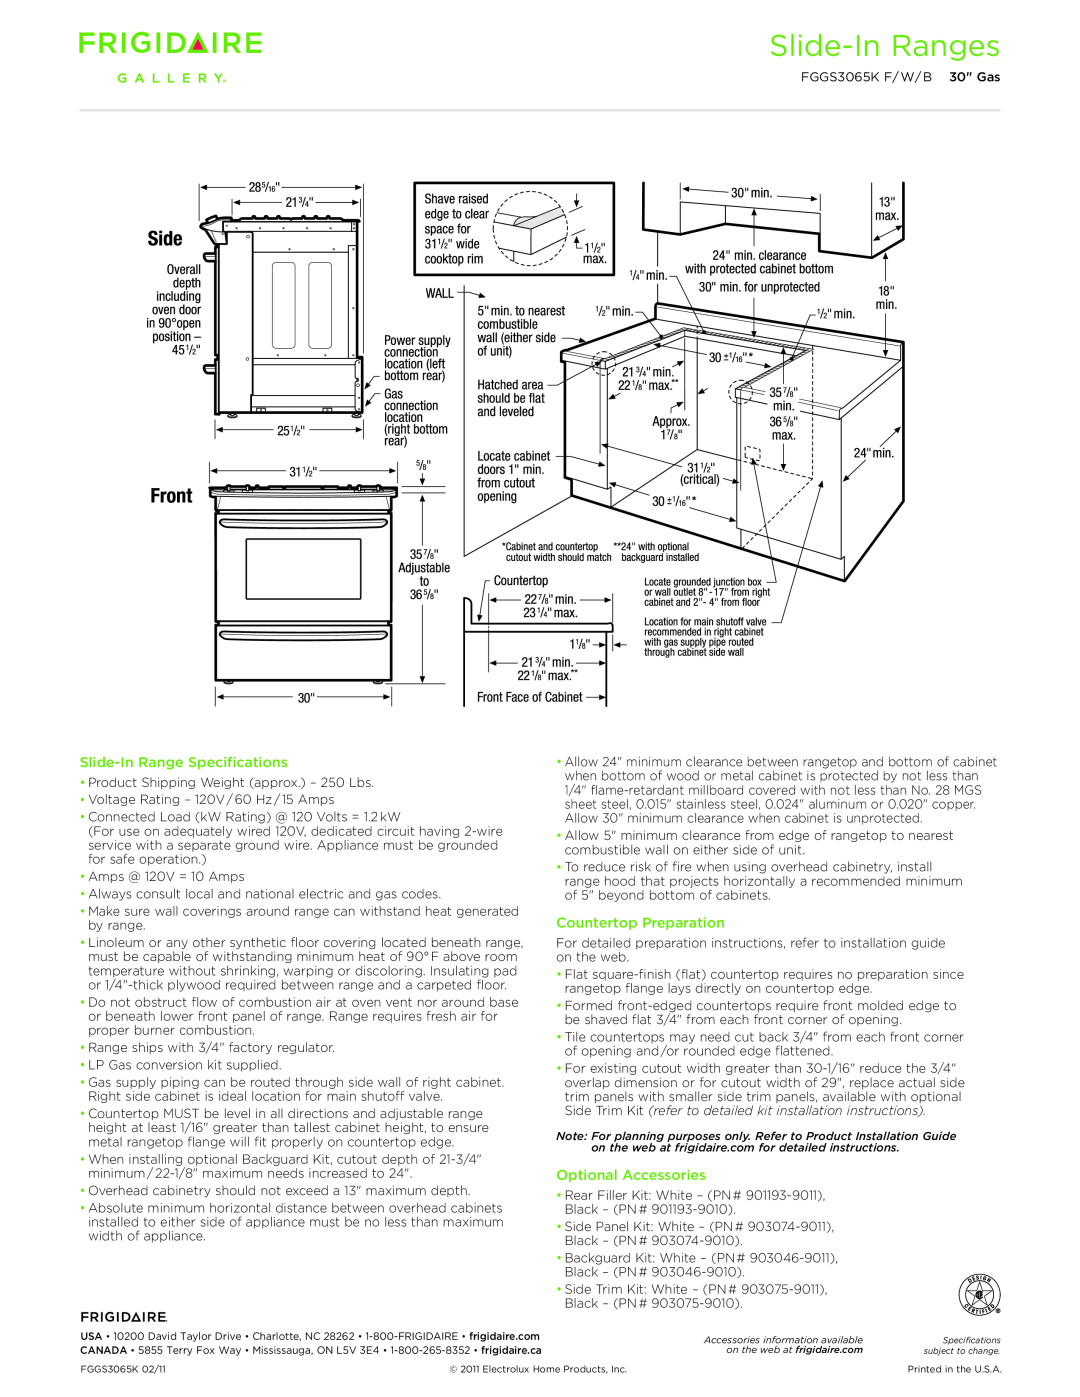 Frigidaire FGGS3065K dimensions Slide-InRange Specifications, Countertop Preparation, Optional Accessories, Slide-InRanges 